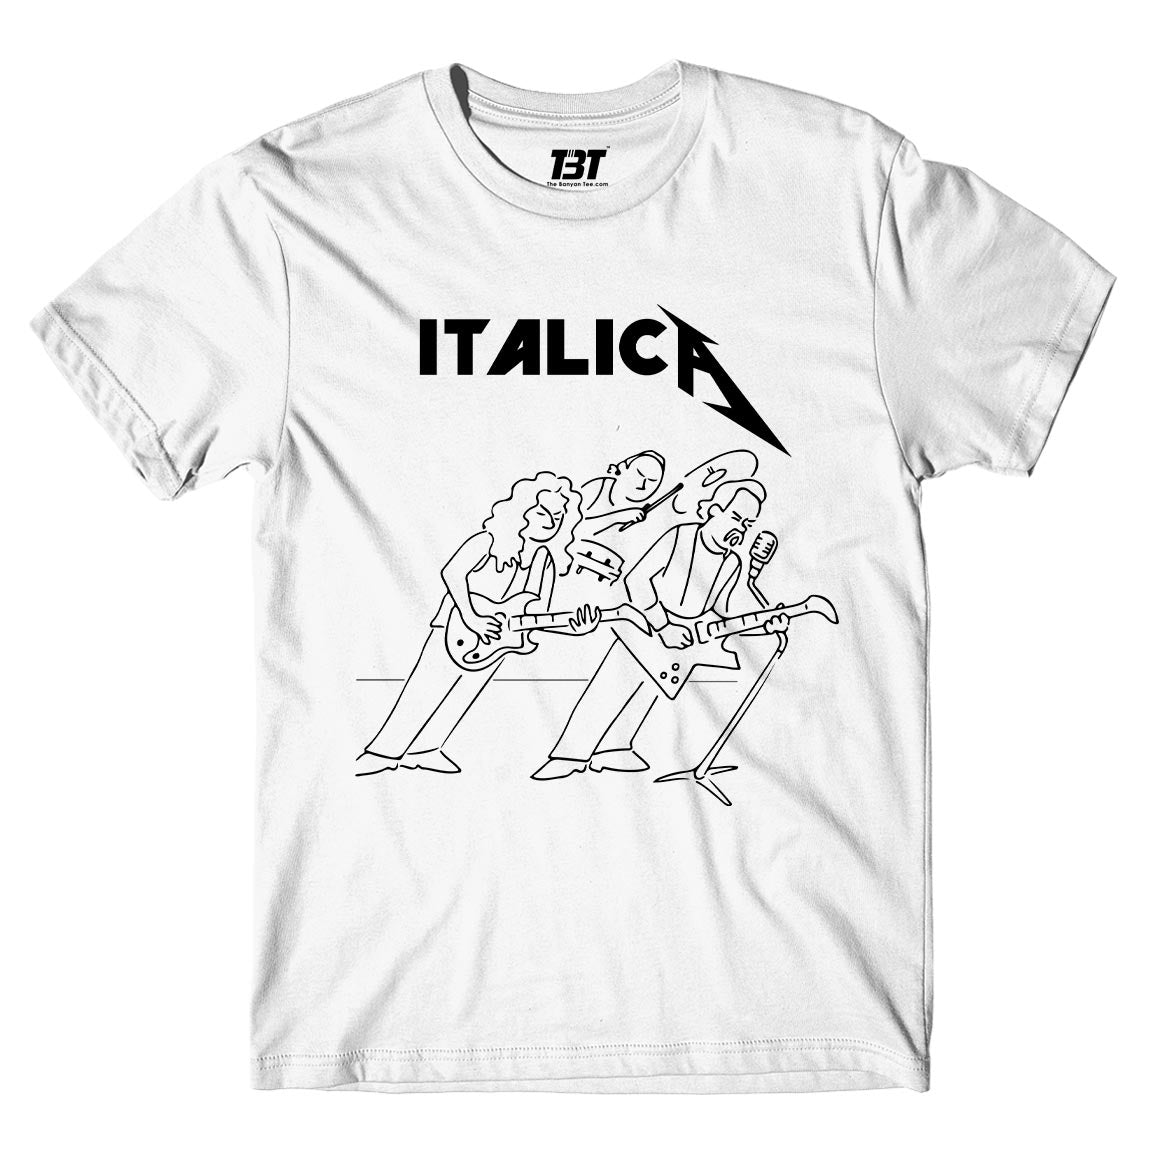 Metallica T-shirt Merchandise Clothing Apparel The Banyan Tee